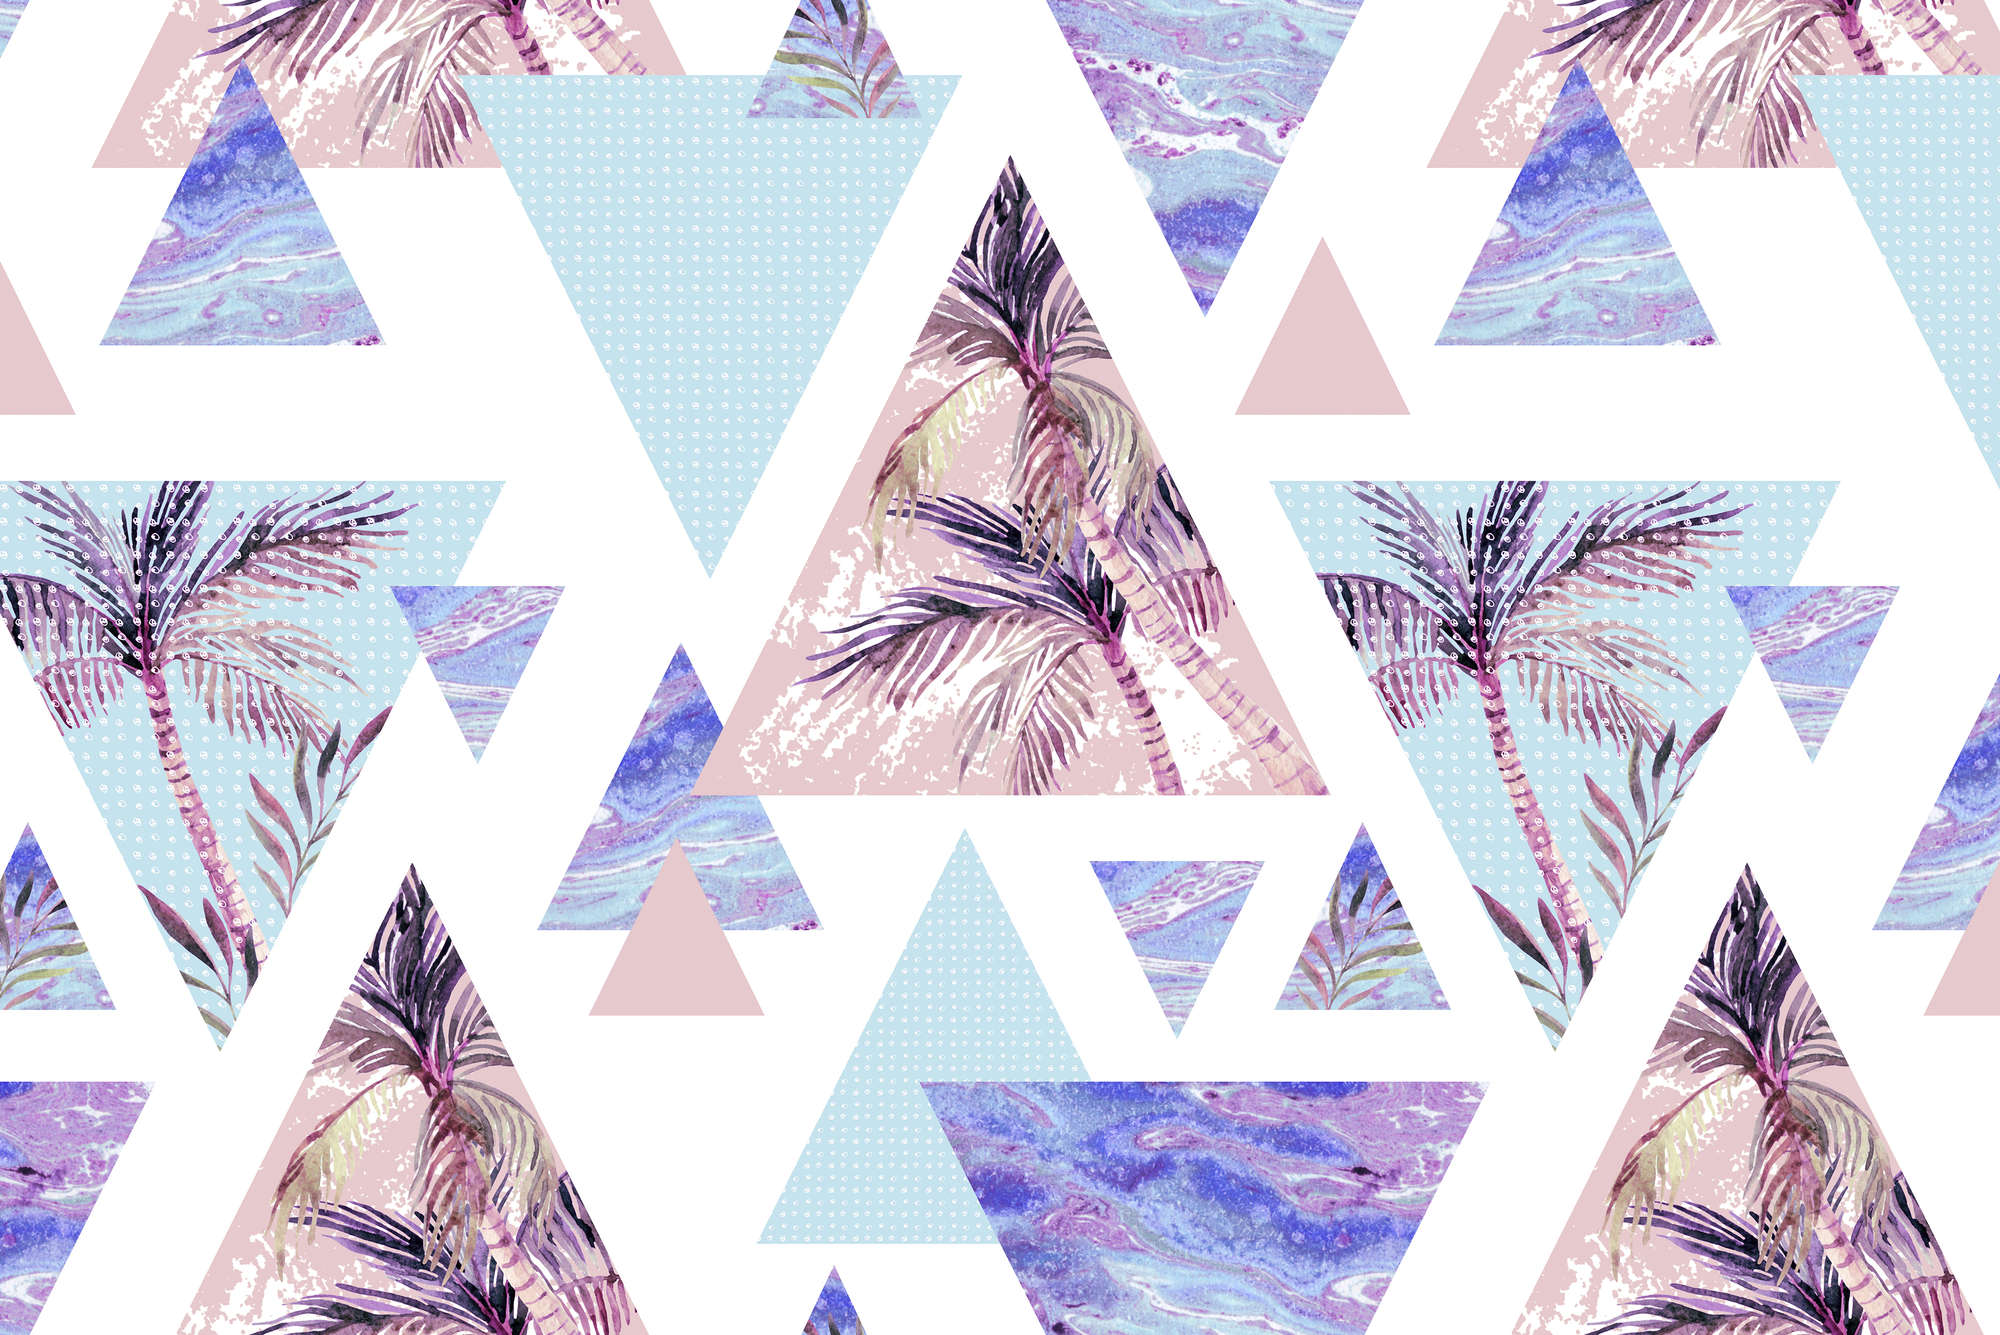             Grafik Fototapete Dreiecke mit Palmen Motiven auf Matt Glattvlies
        